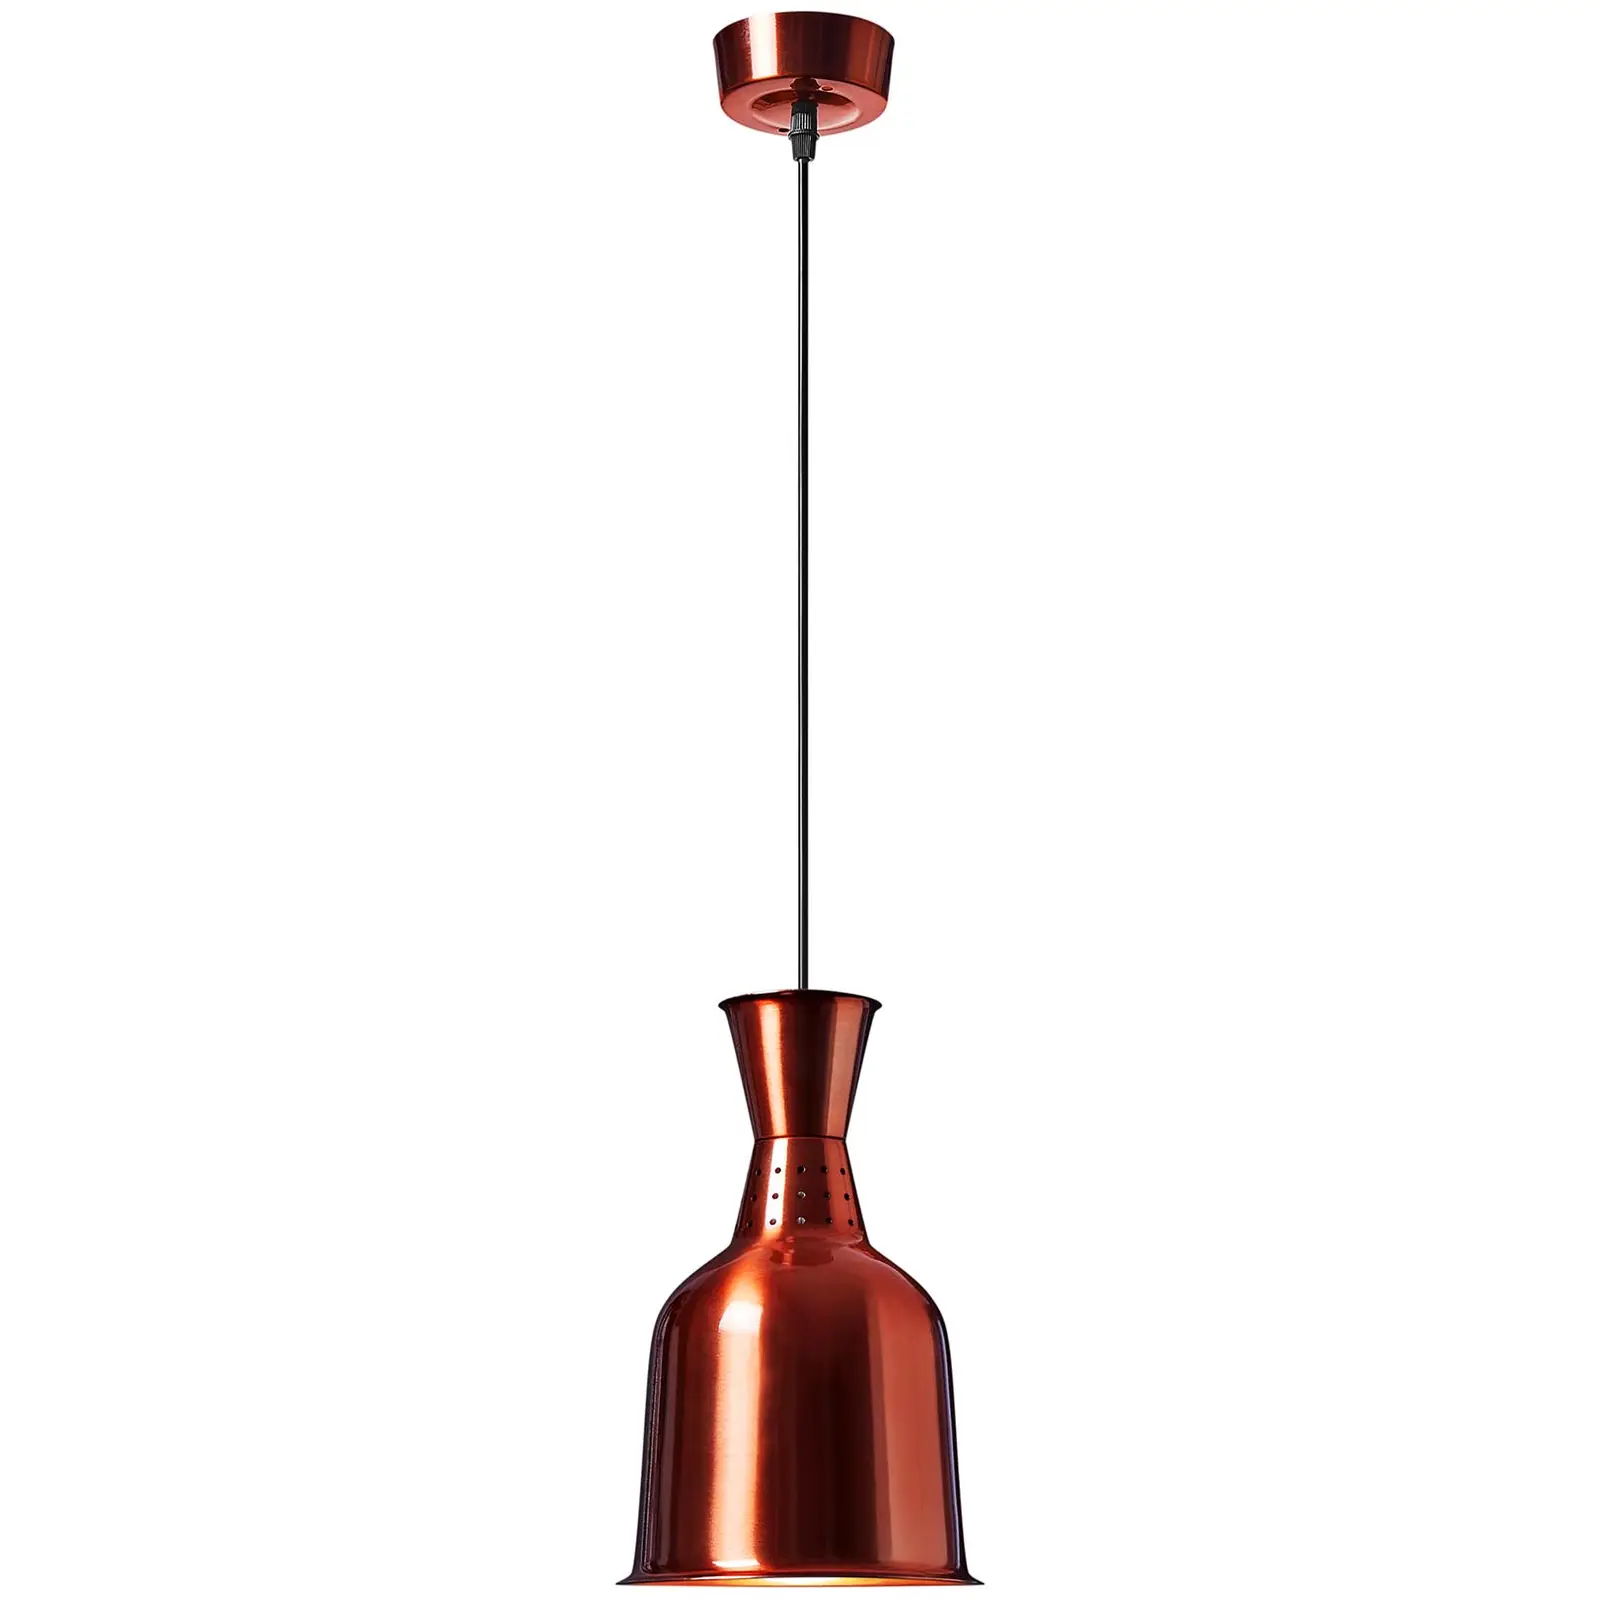 Lampada riscaldante - ottone - 19 x 19 x 29 cm  - acciaio 